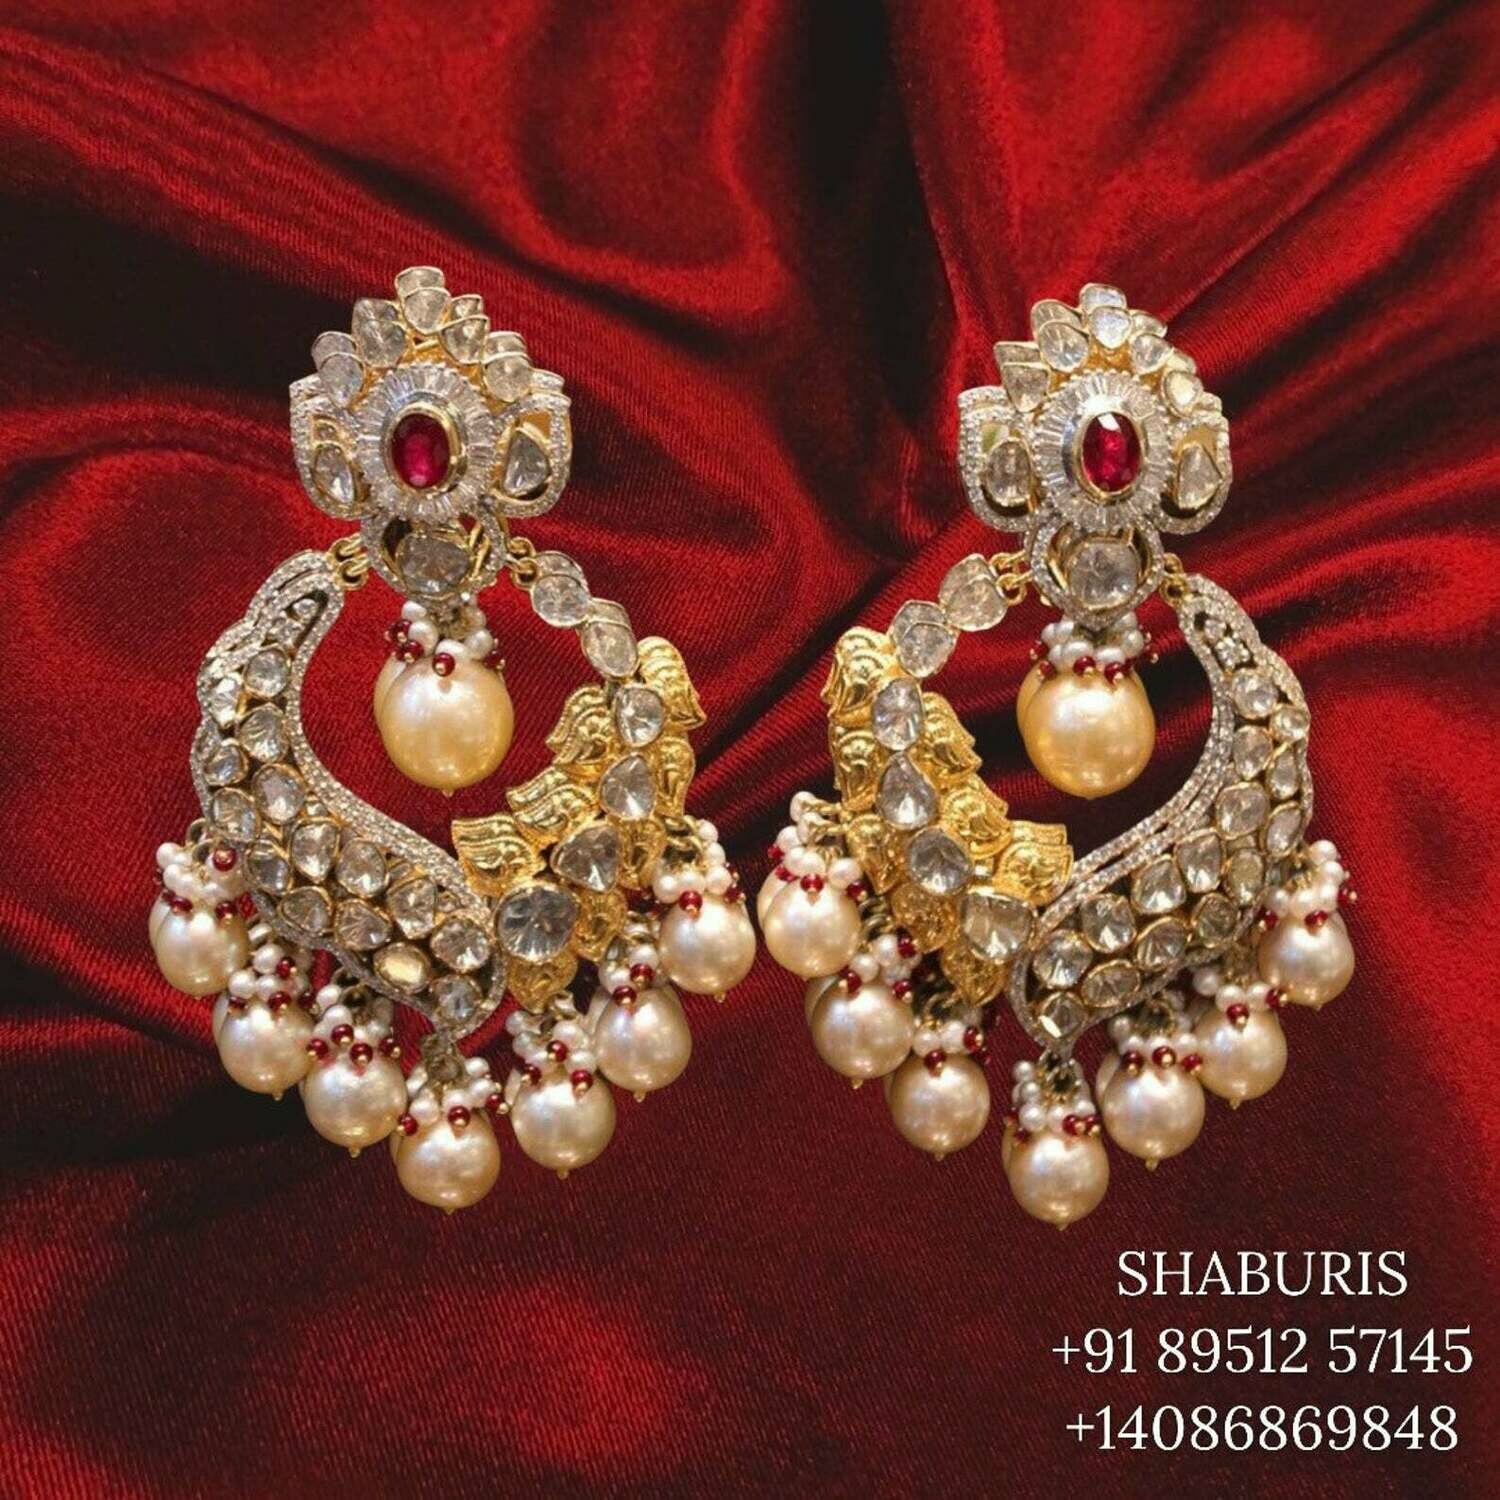 Polki earrings Pure Silver jewelry Indian ,diamond earrings ,Indian gold jewelry designs quartz earrings - SHABURIS